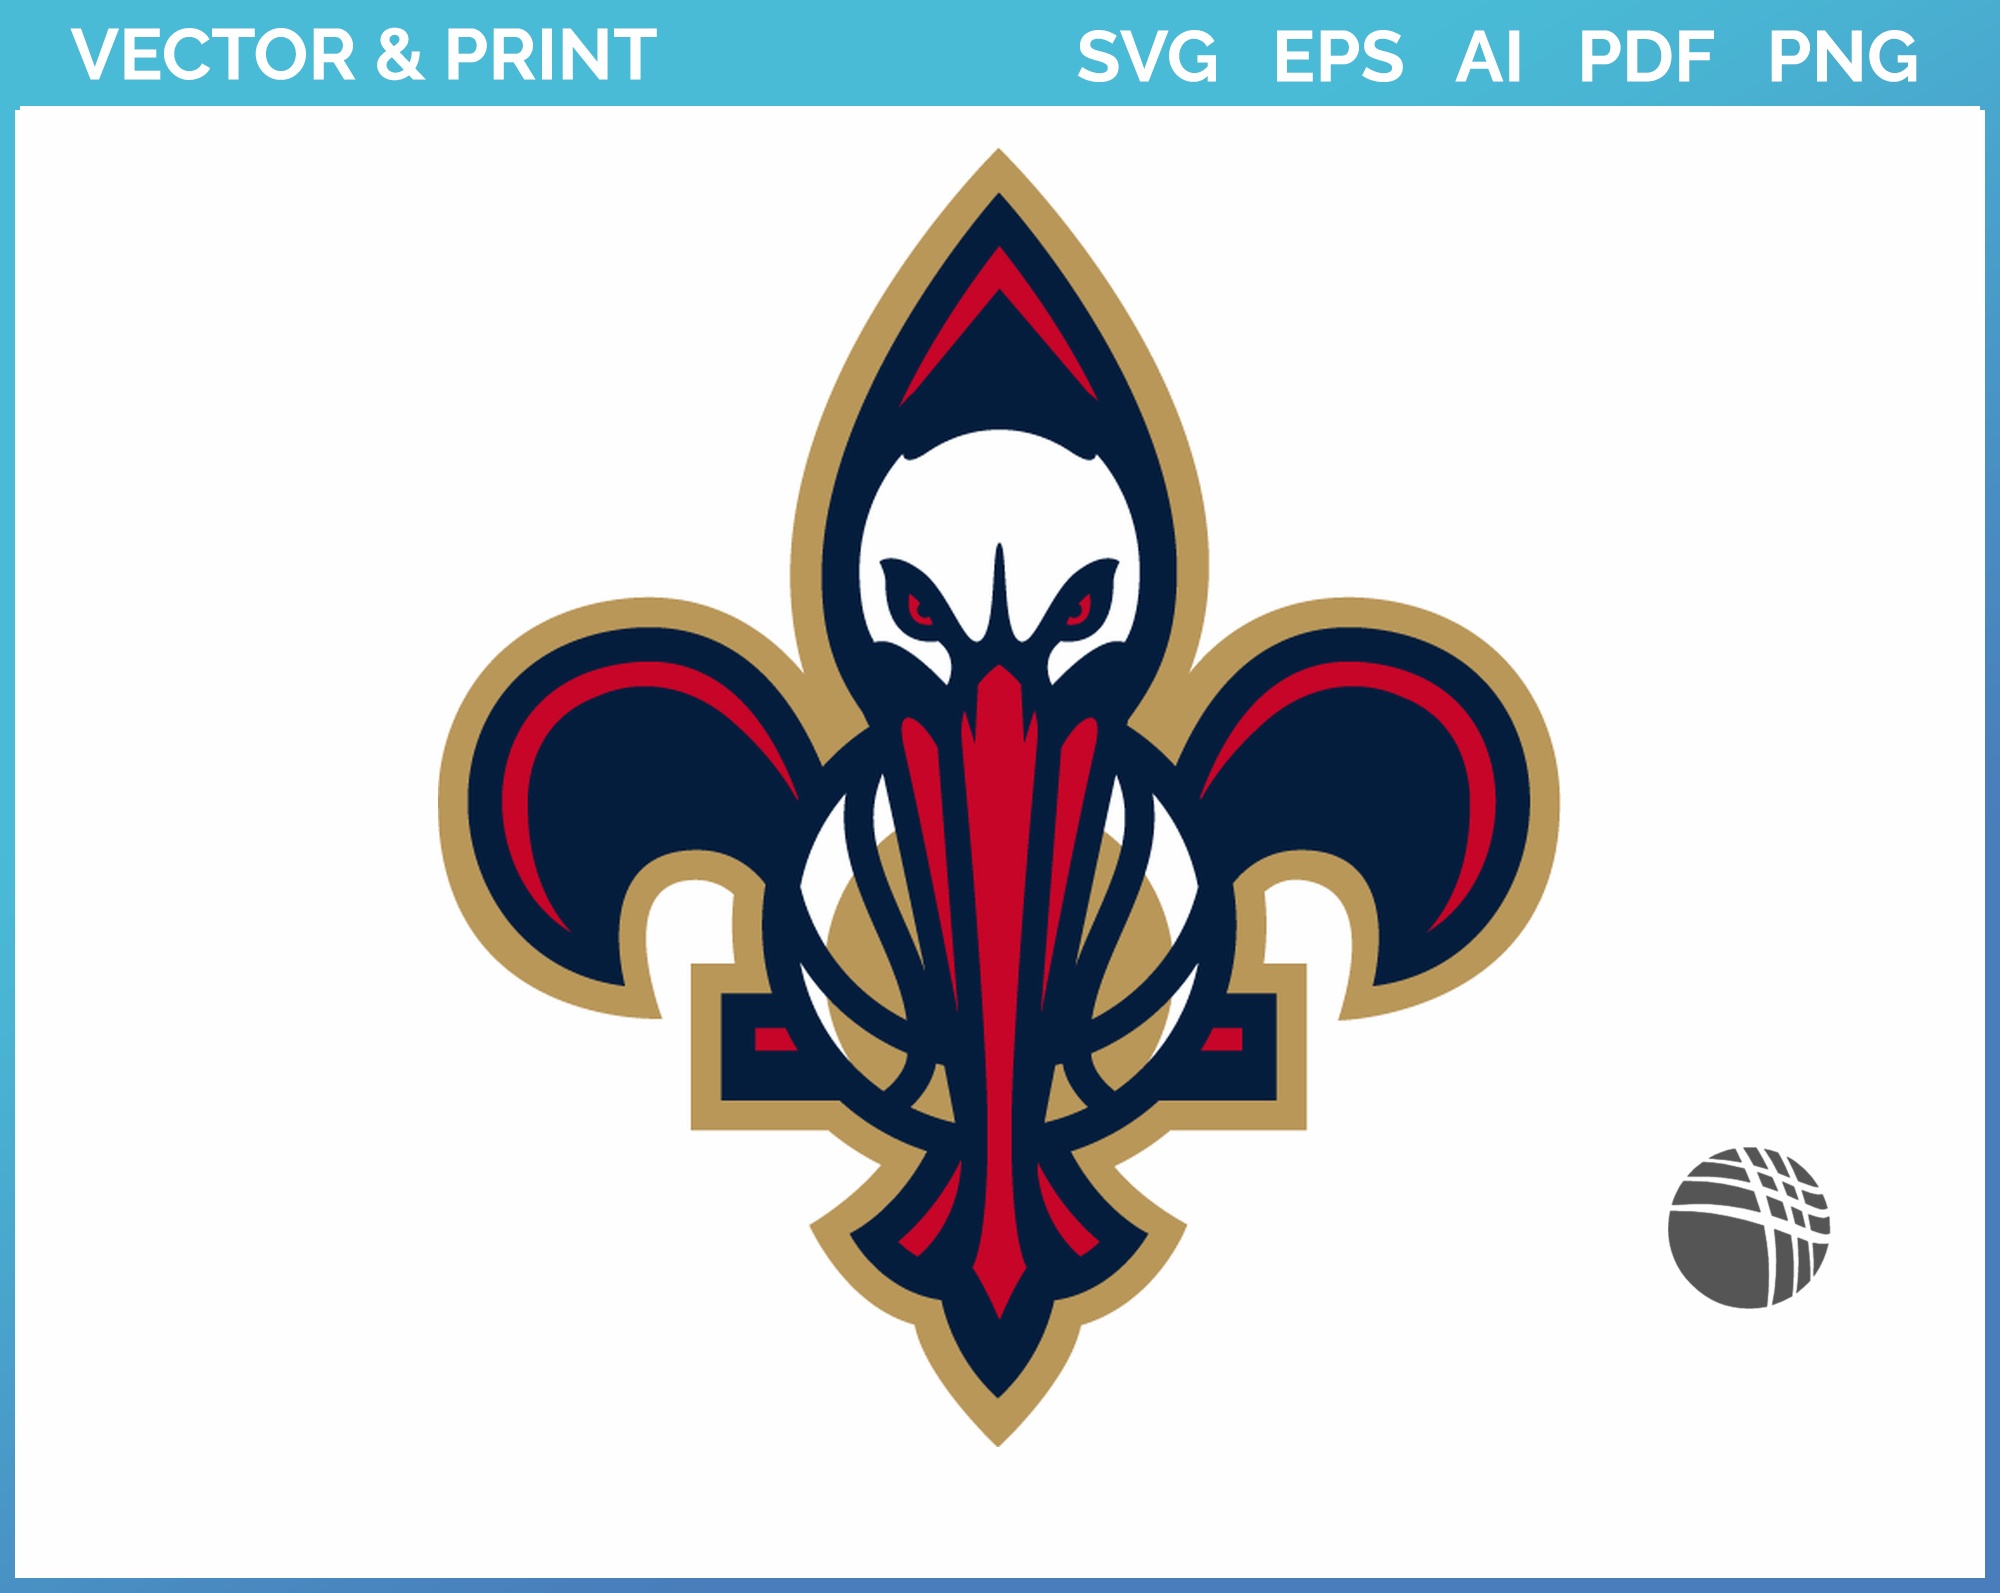 New Orleans Pelicans XL Logo Pop –